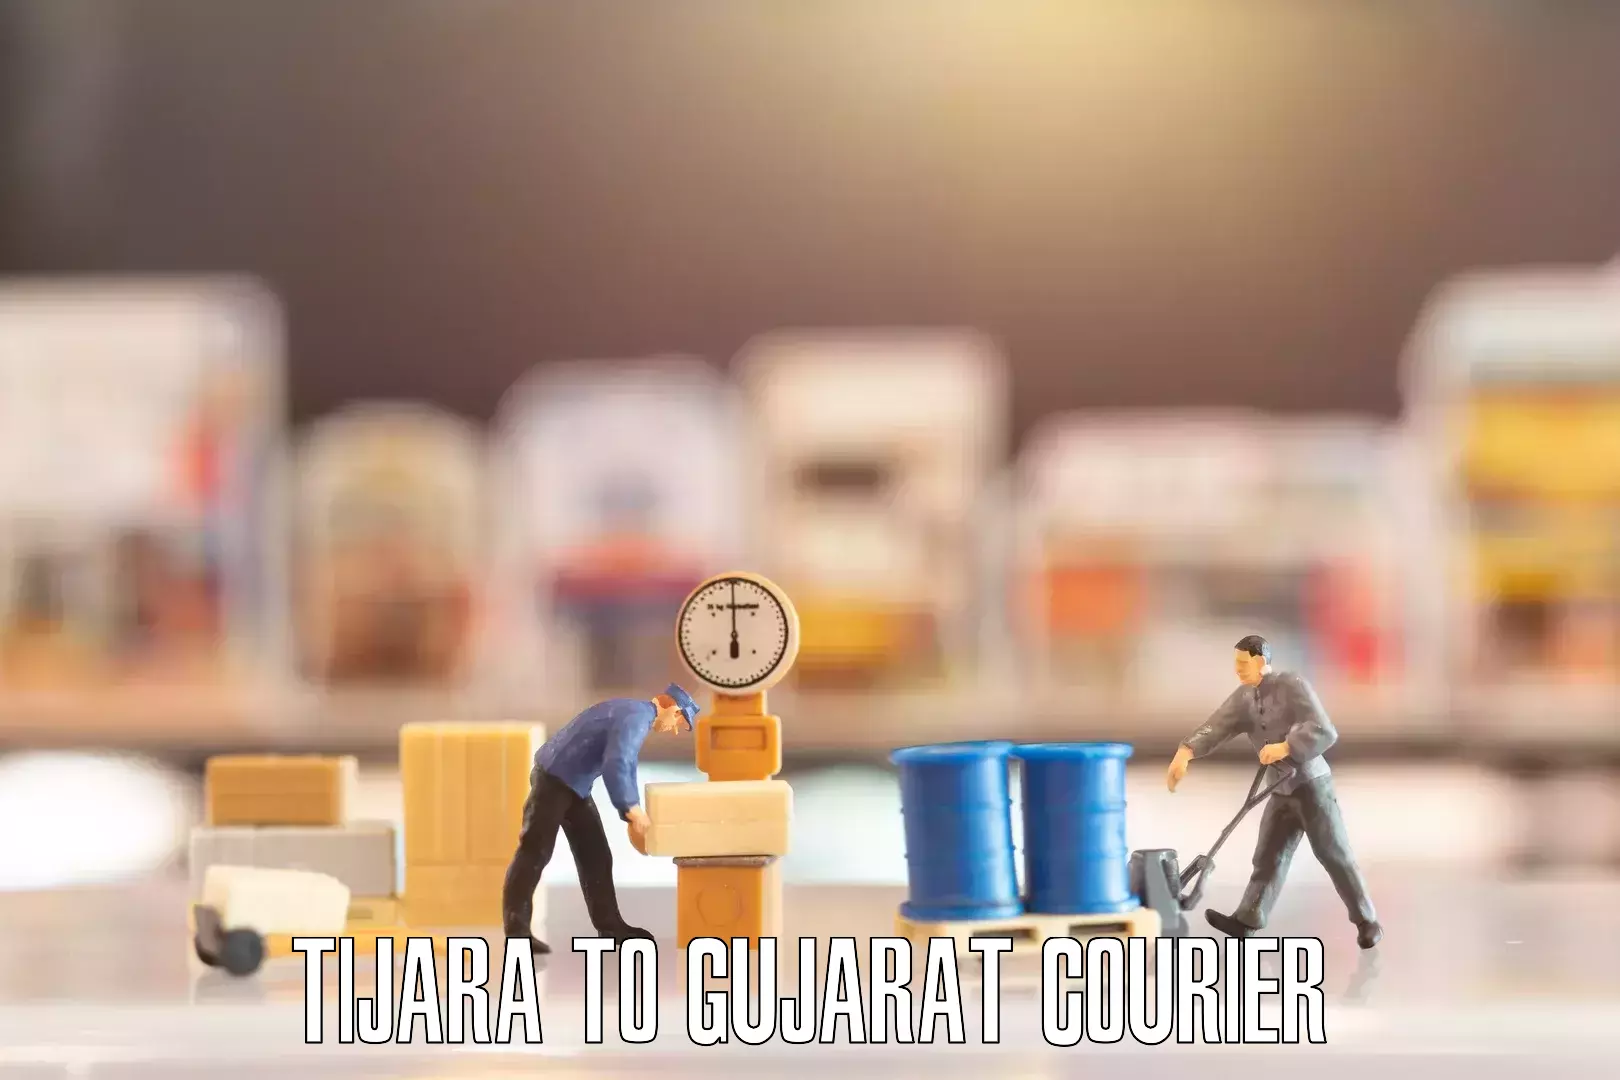 Efficient moving company in Tijara to Gujarat